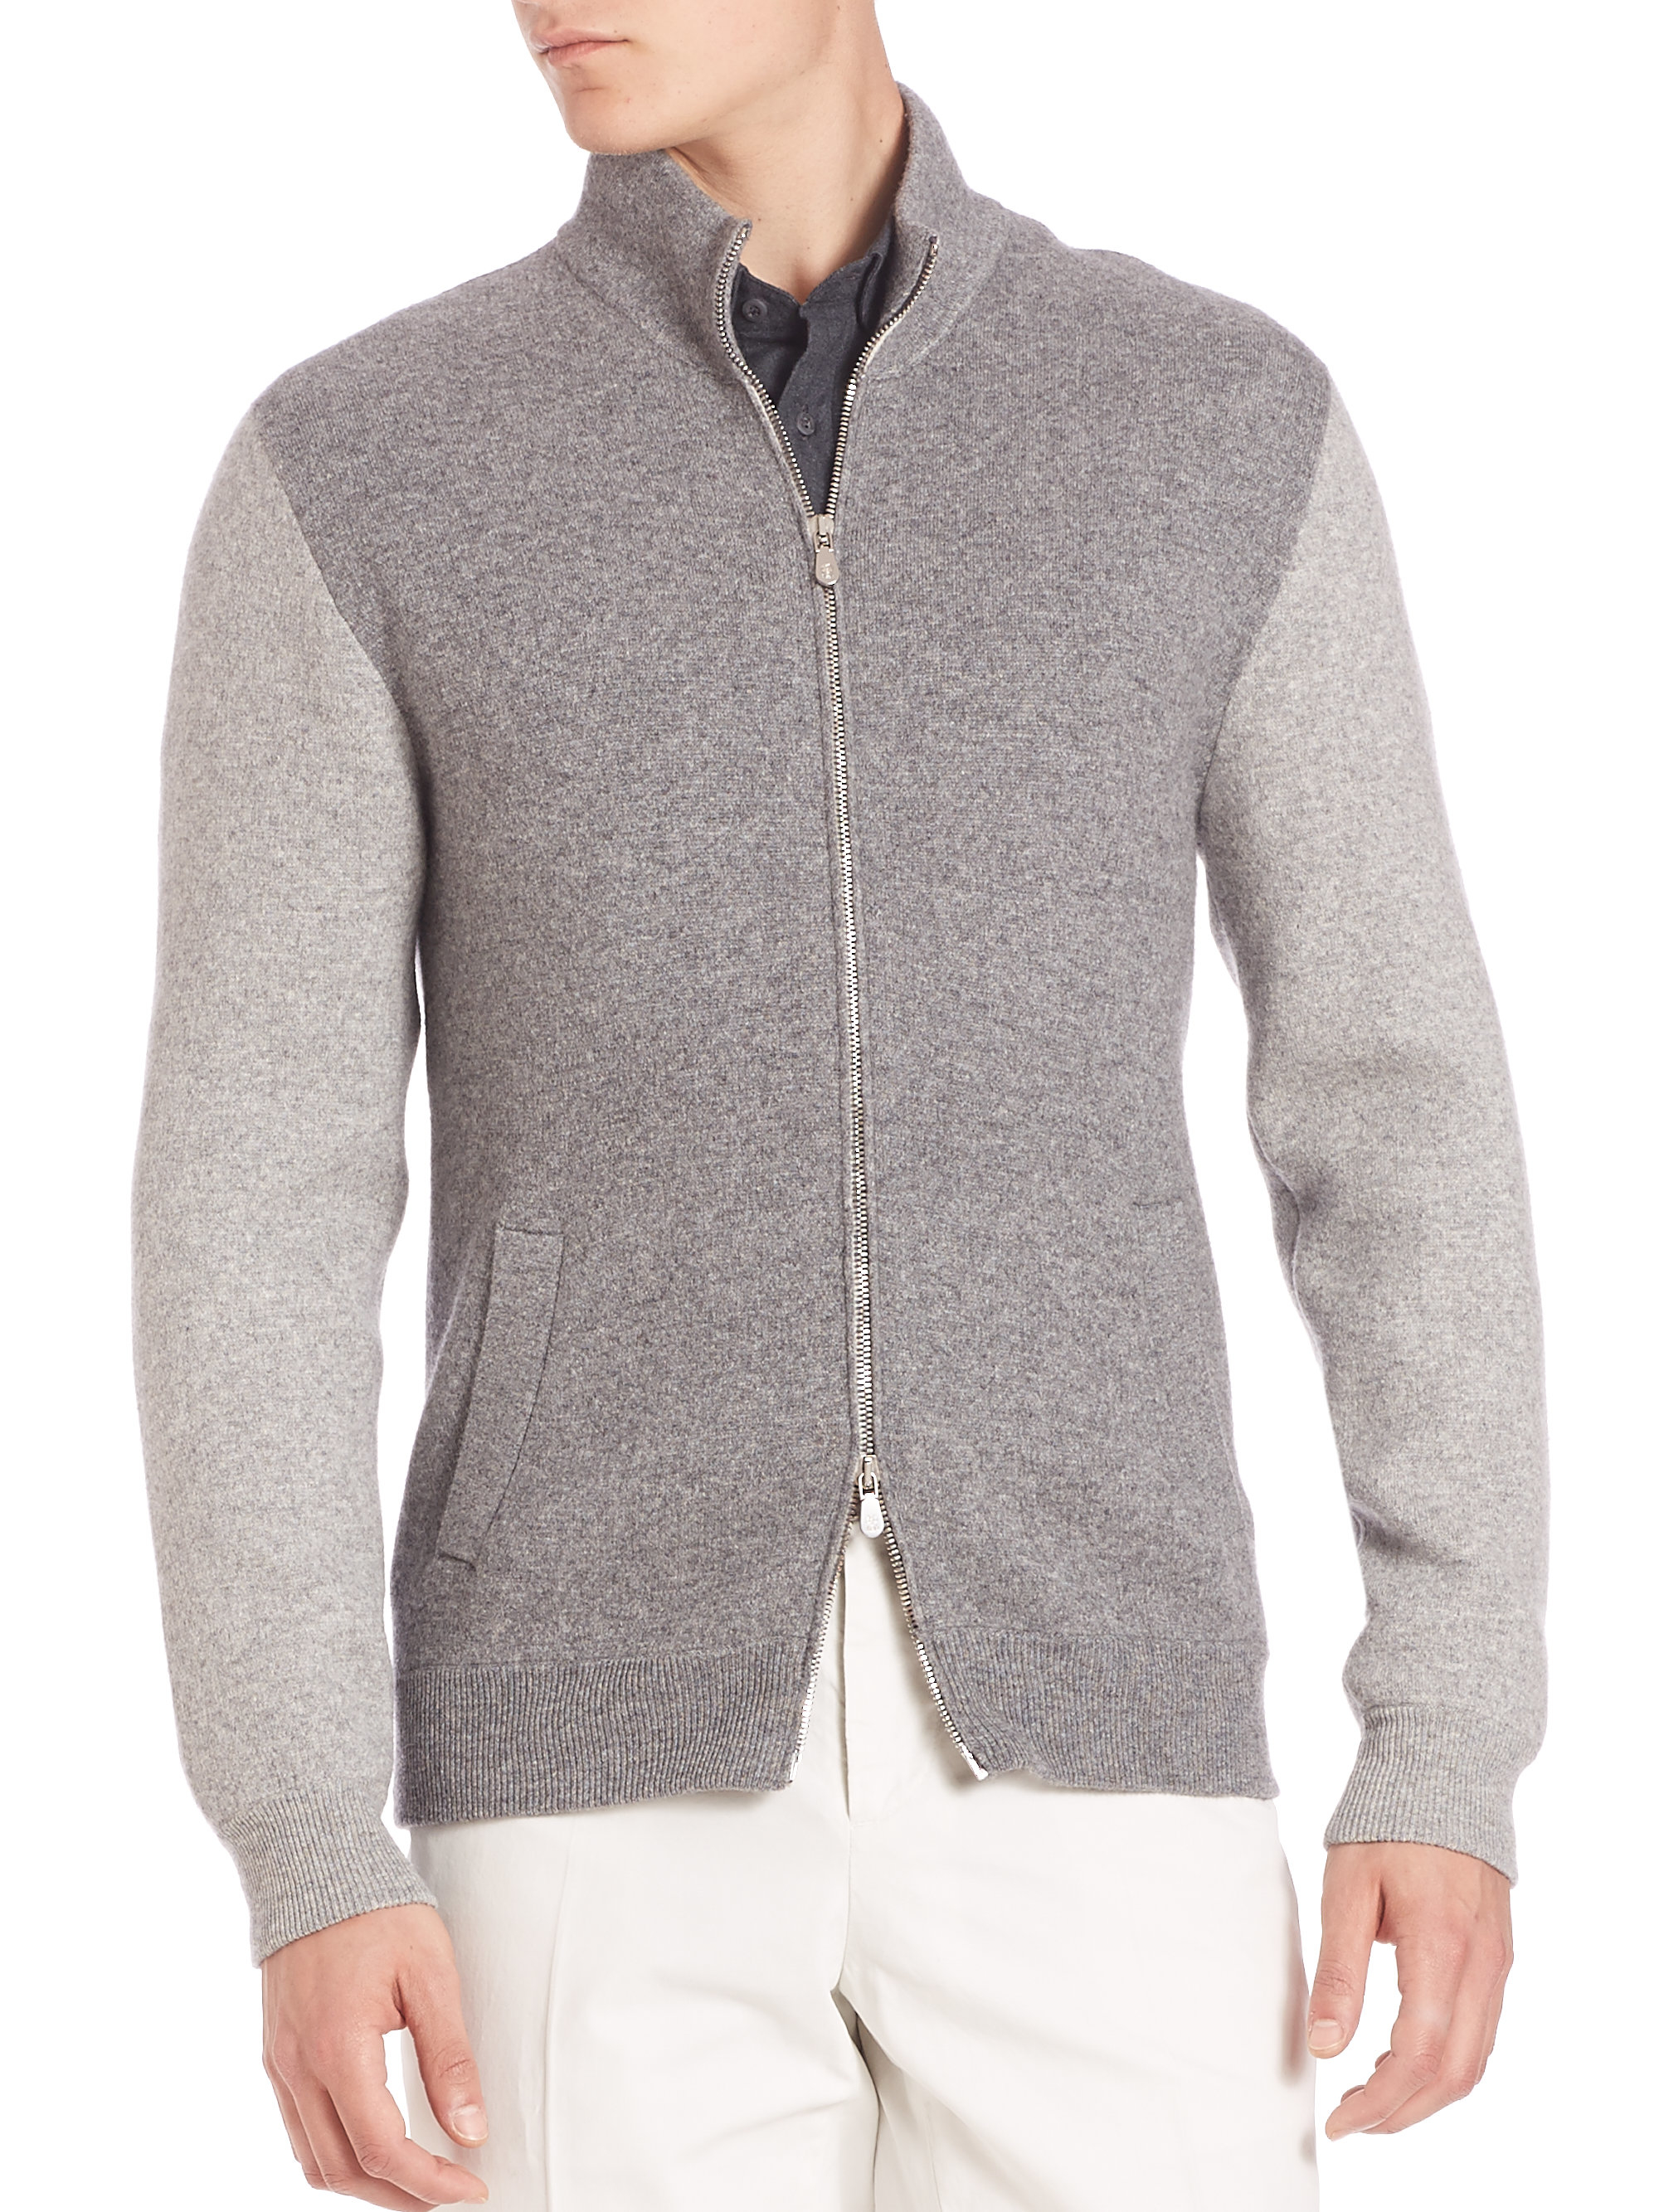 Brunello Cucinelli Zip-front Baseball Sweater in Gray for Men - Lyst